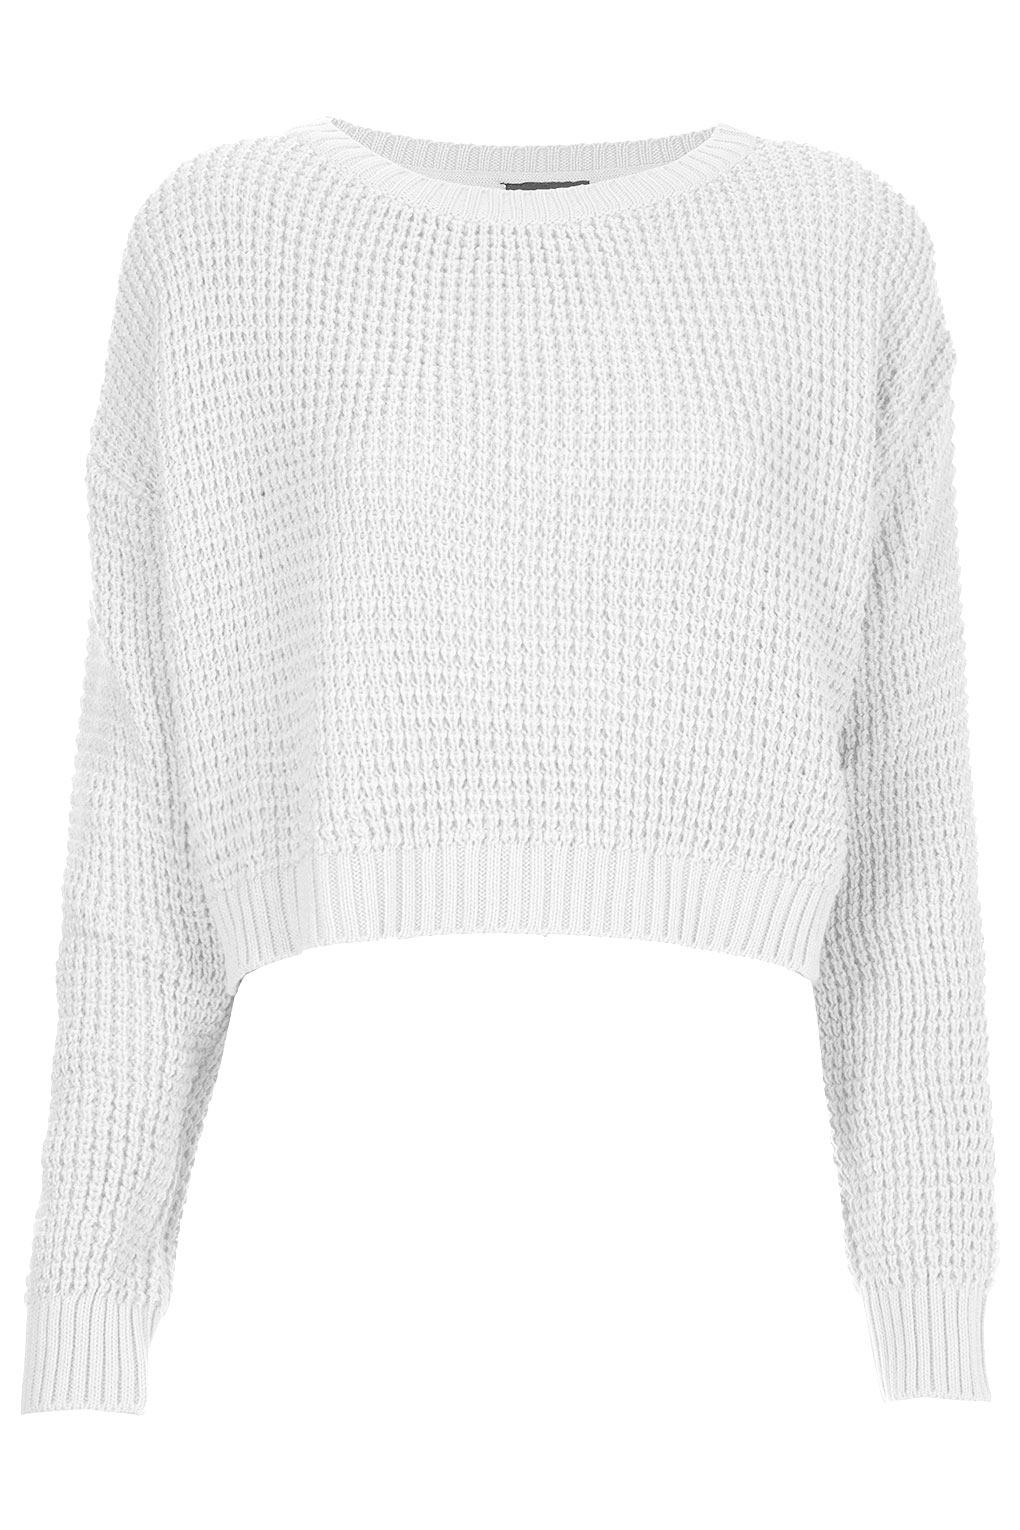 Lyst - Topshop Knitted Textured Crop Jumper in White